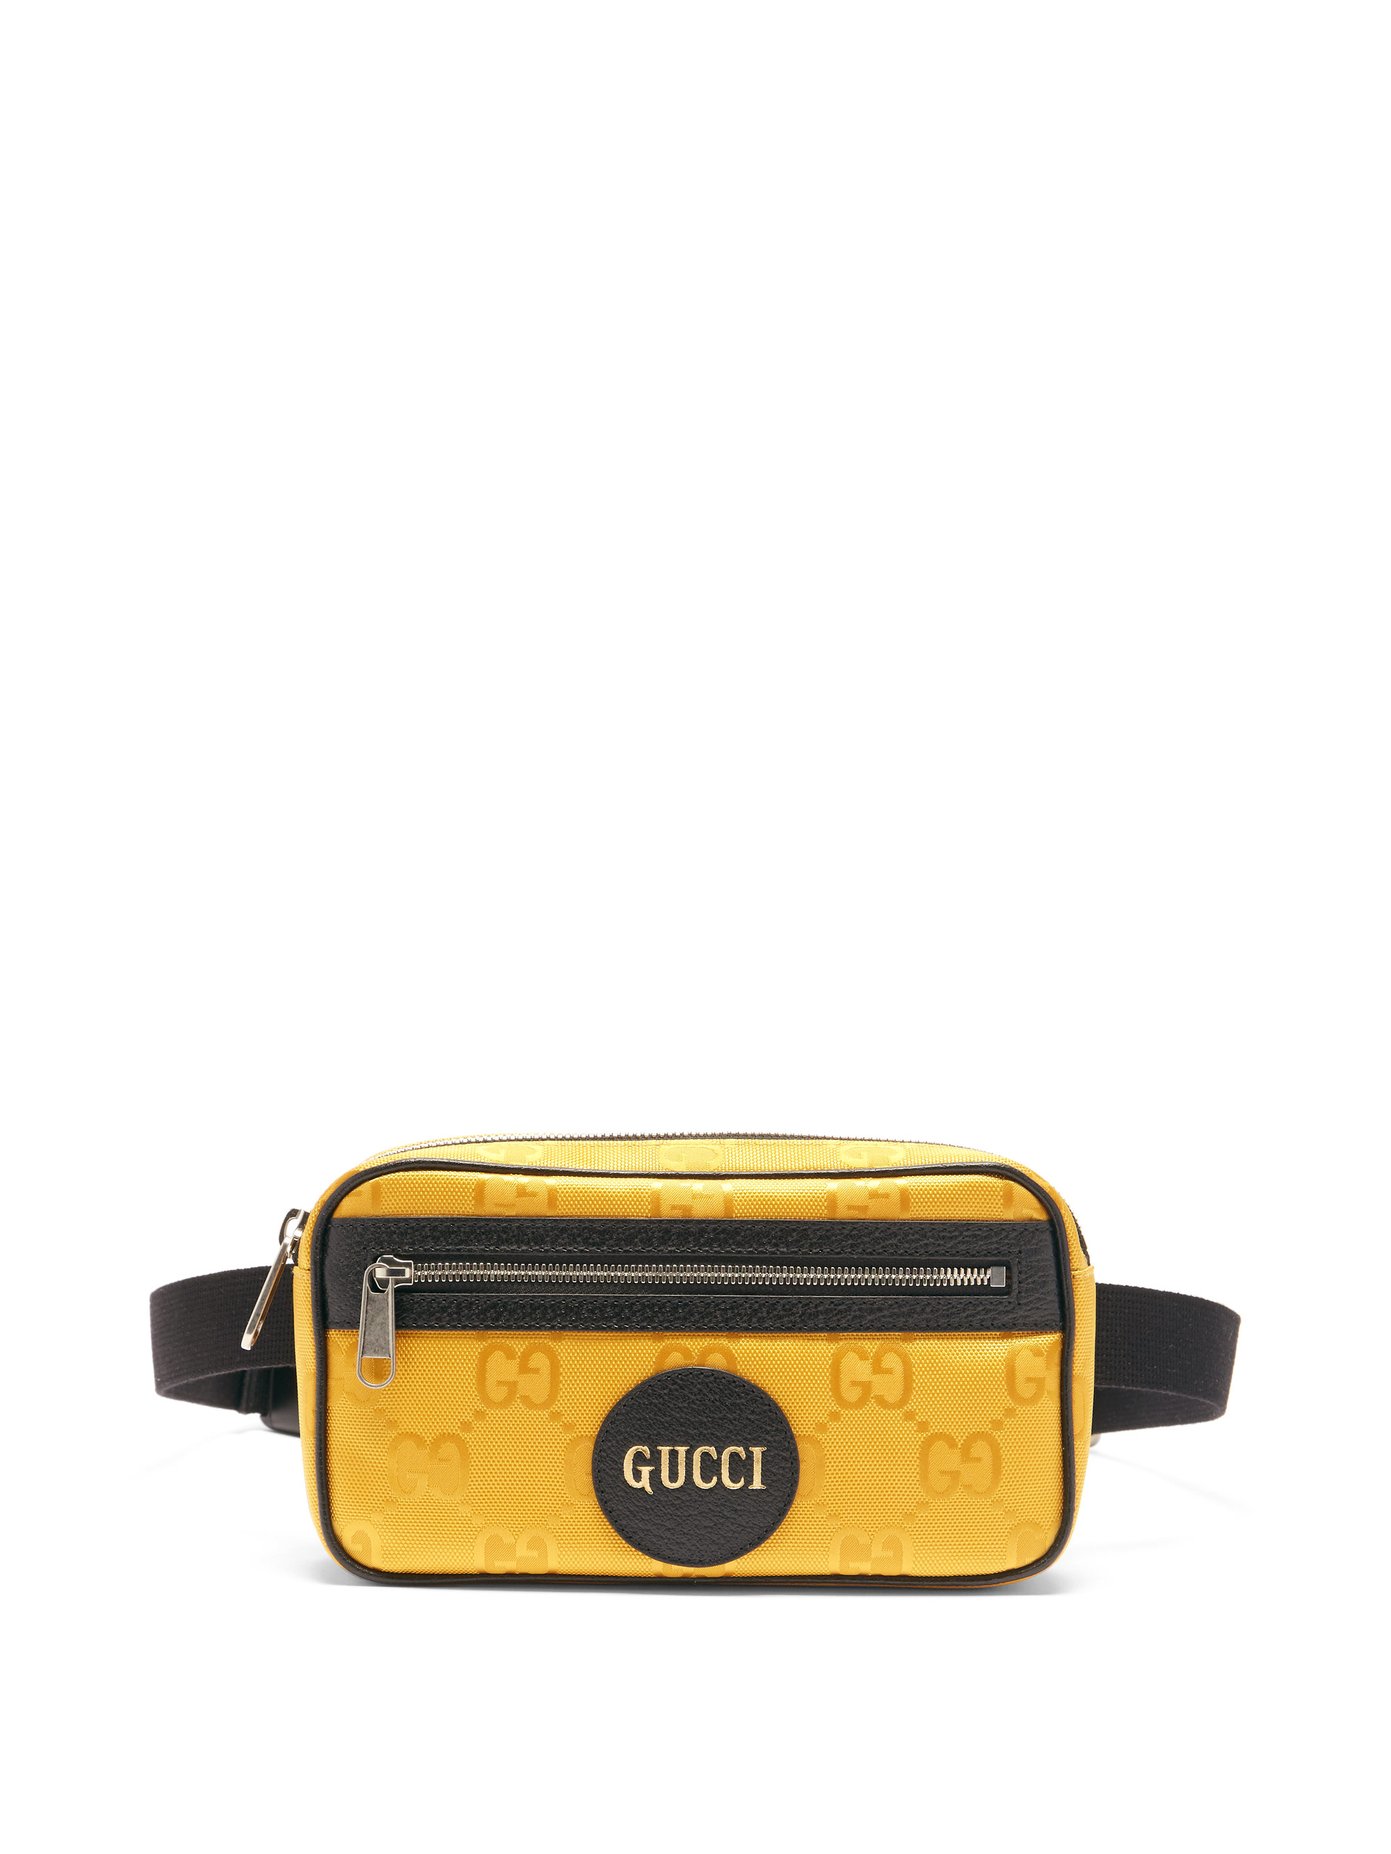 gucci belt and bag